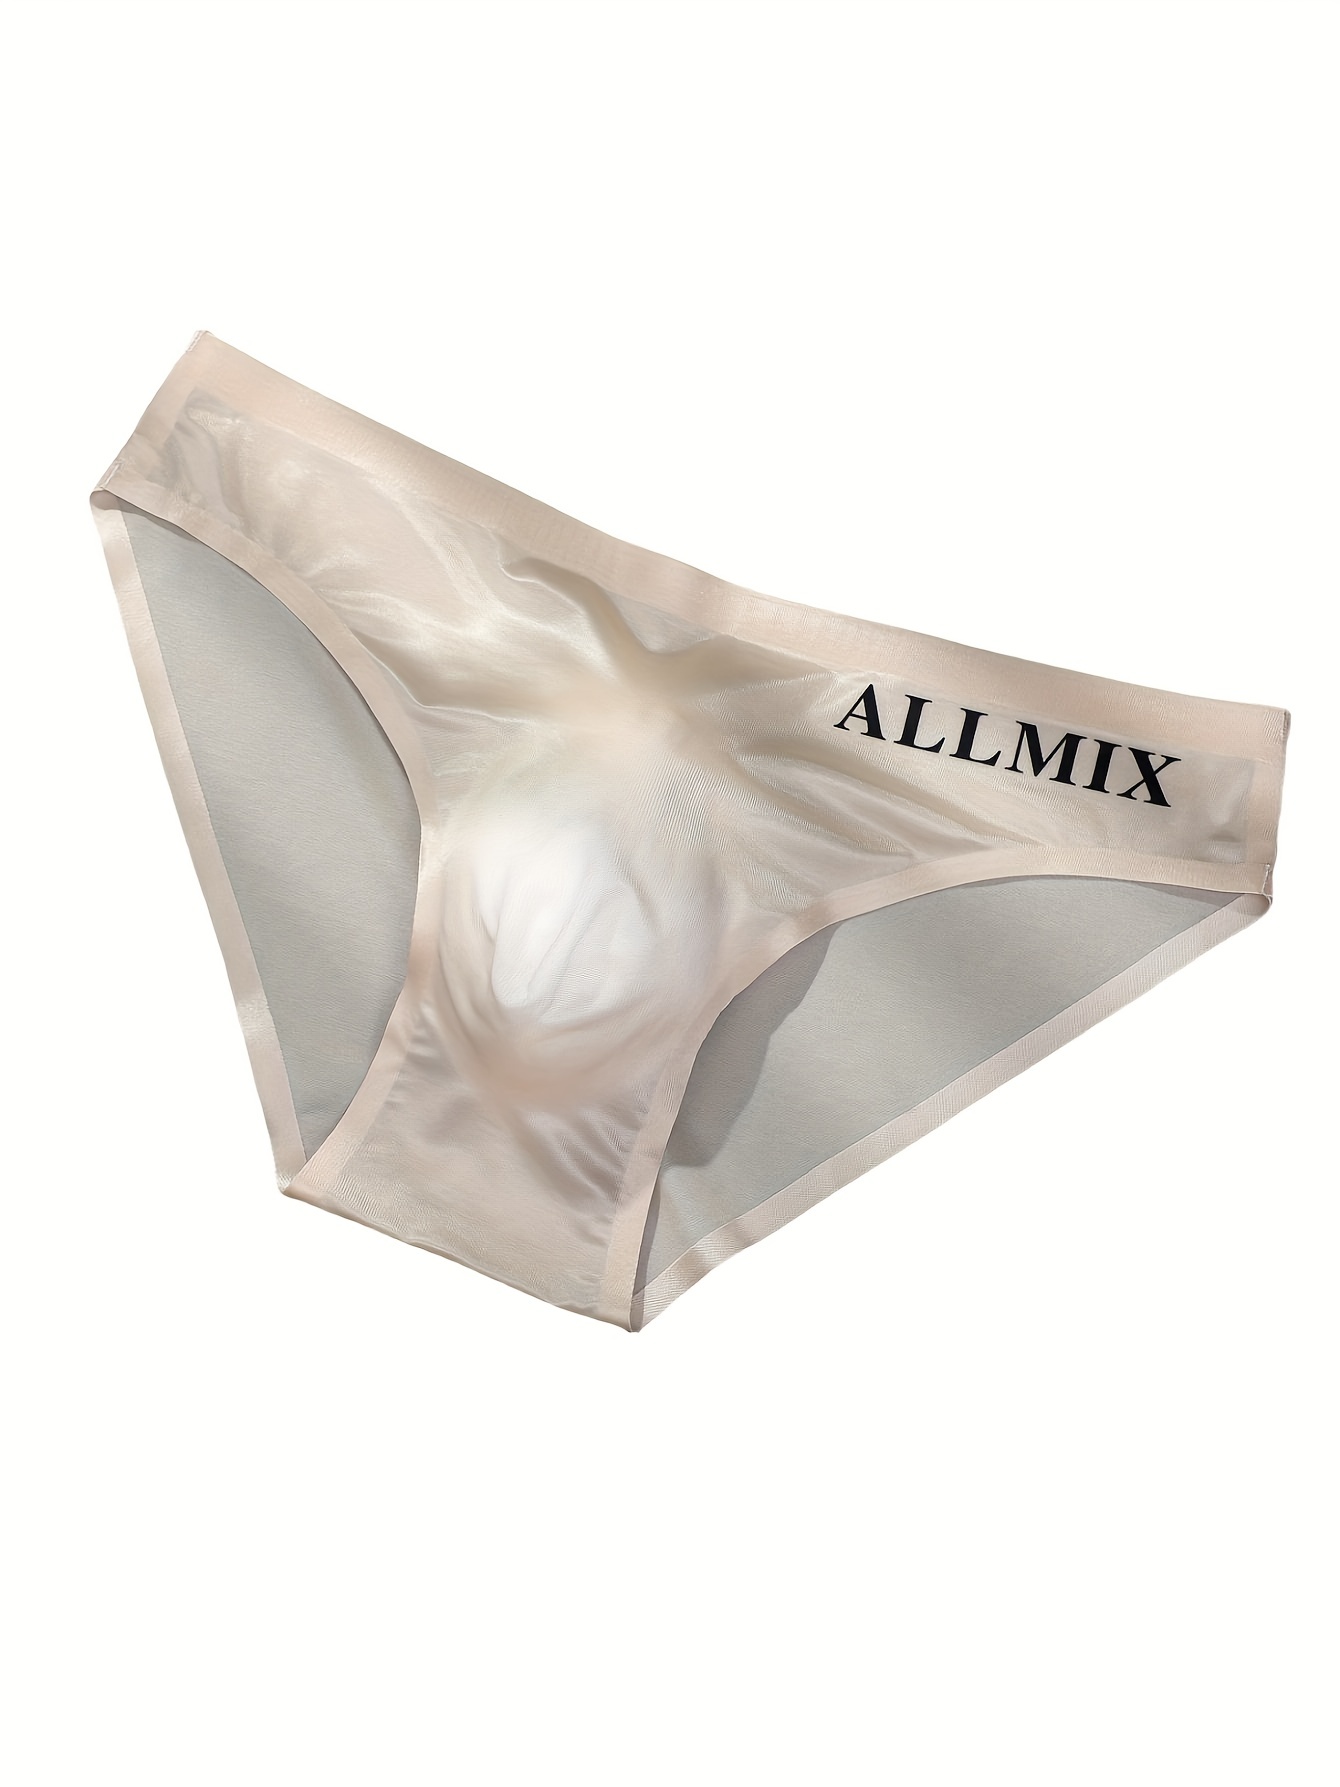 ALLMIX 3Pcs/Lot Sexy Women's SPorts Panties Sets Underwear